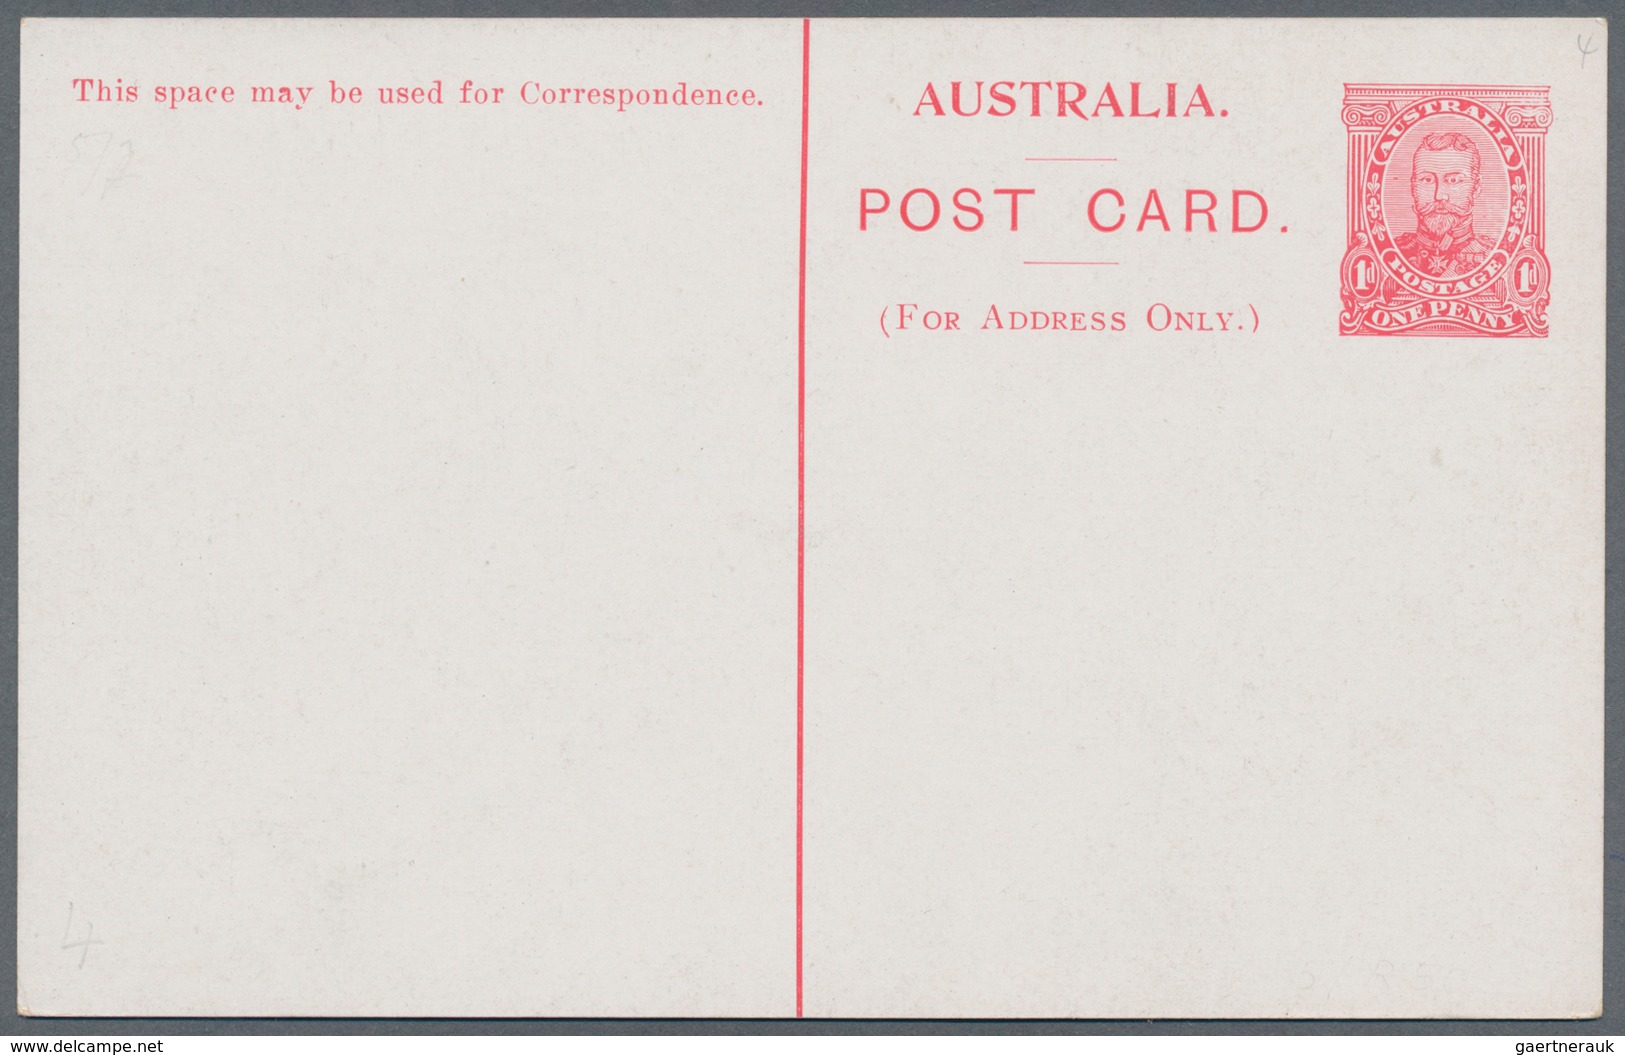 Australien - Ganzsachen: 1911, Victorian Scenes postcards KGV 1d. full-face COMPLETE SET of the twel